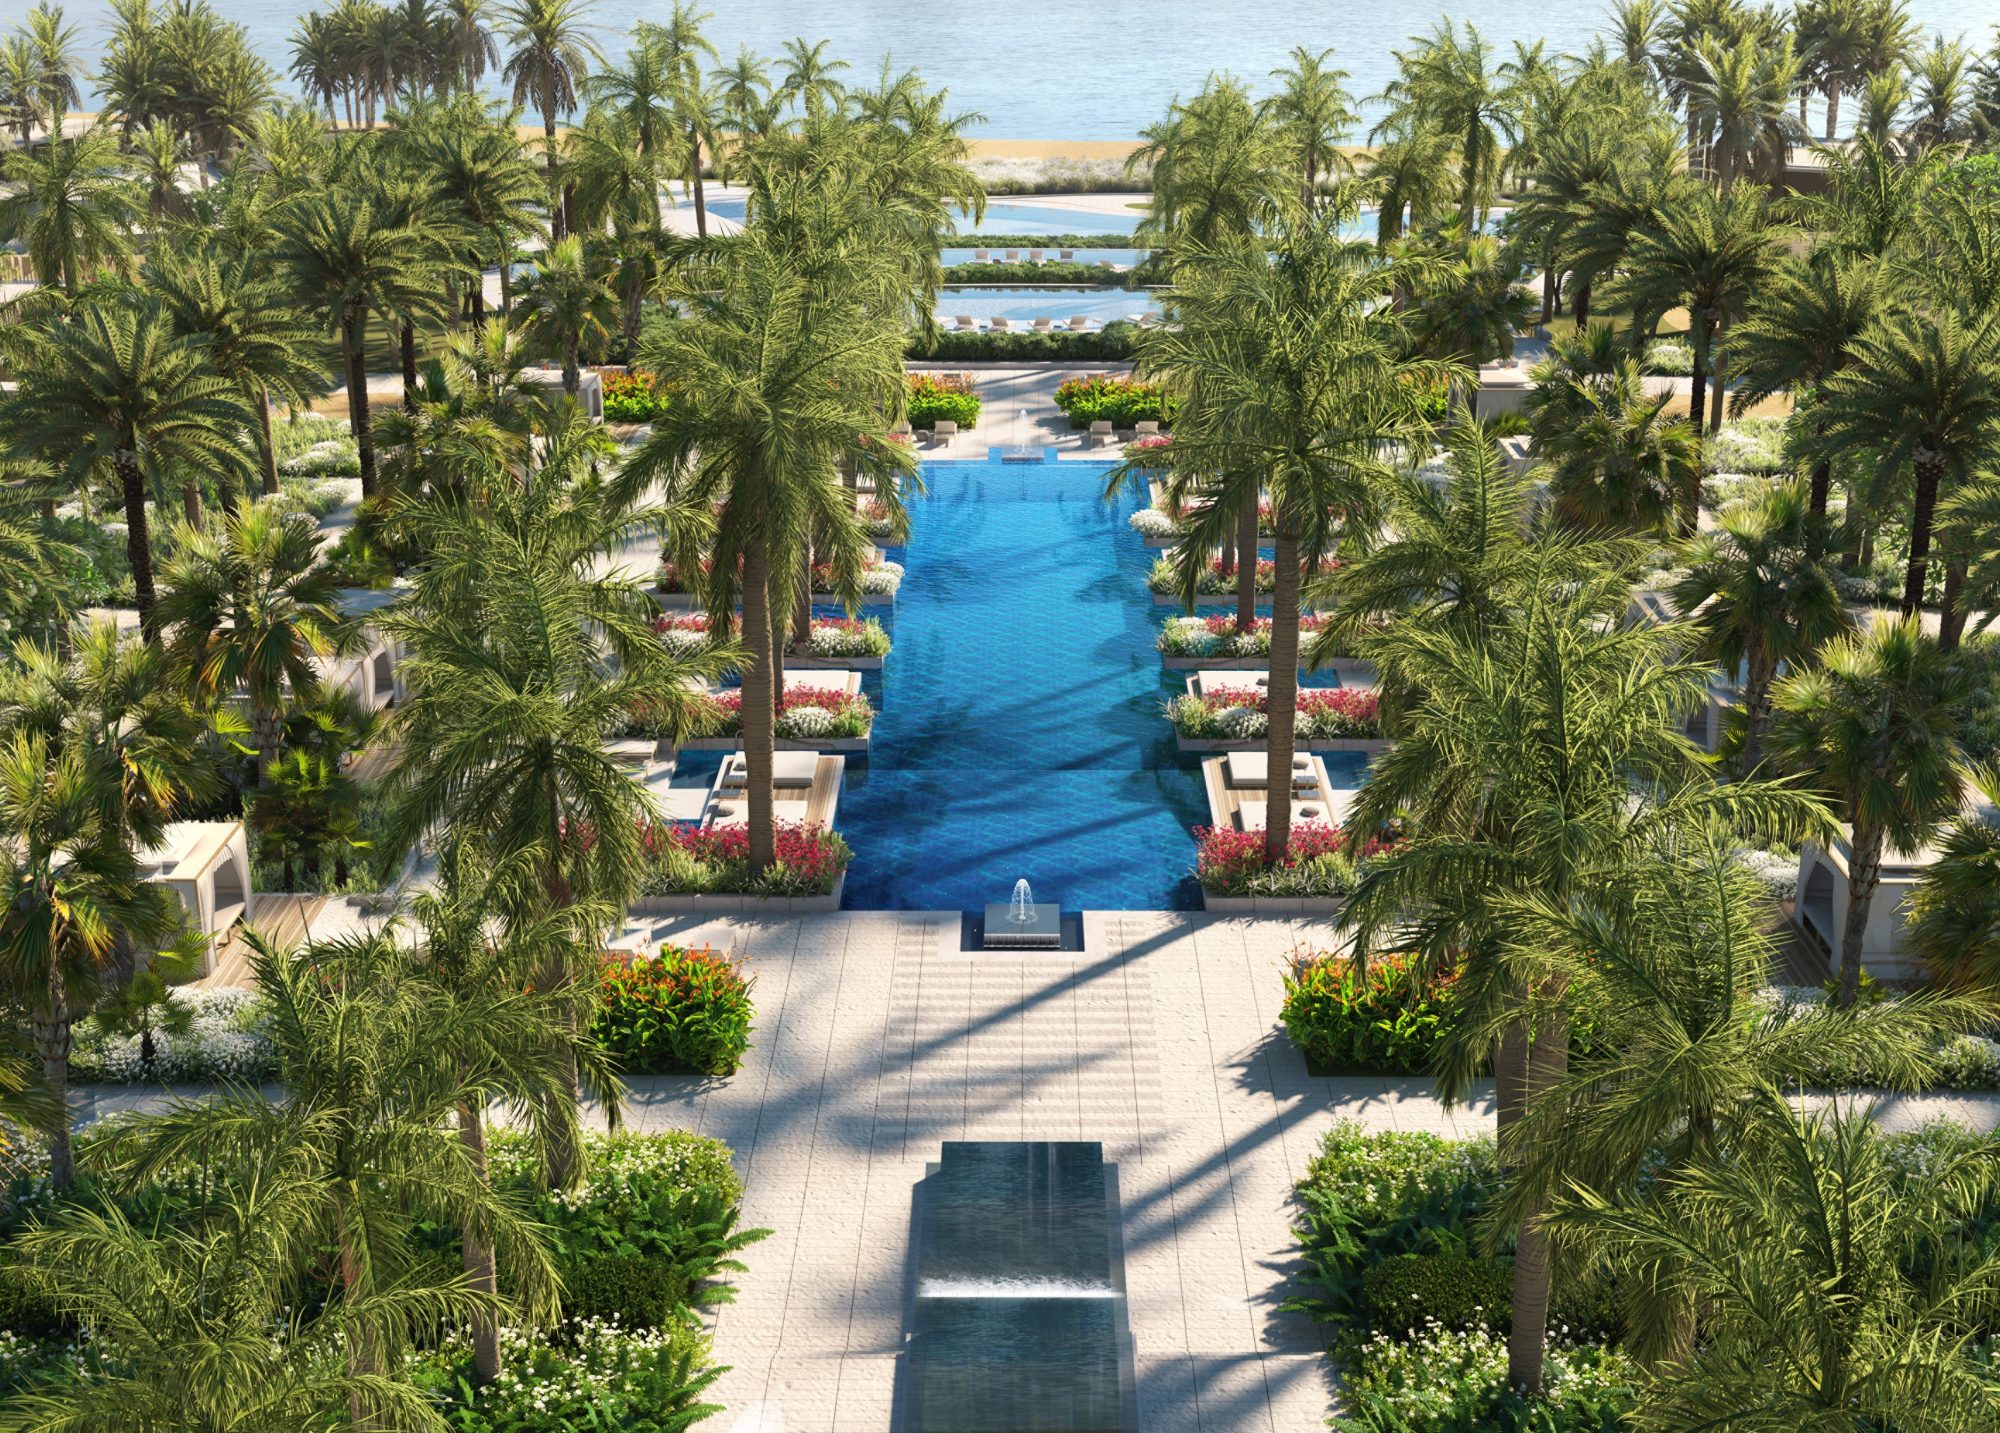 Inside the upcoming Four Seasons Resort and Residences AMAALA at Triple Bay